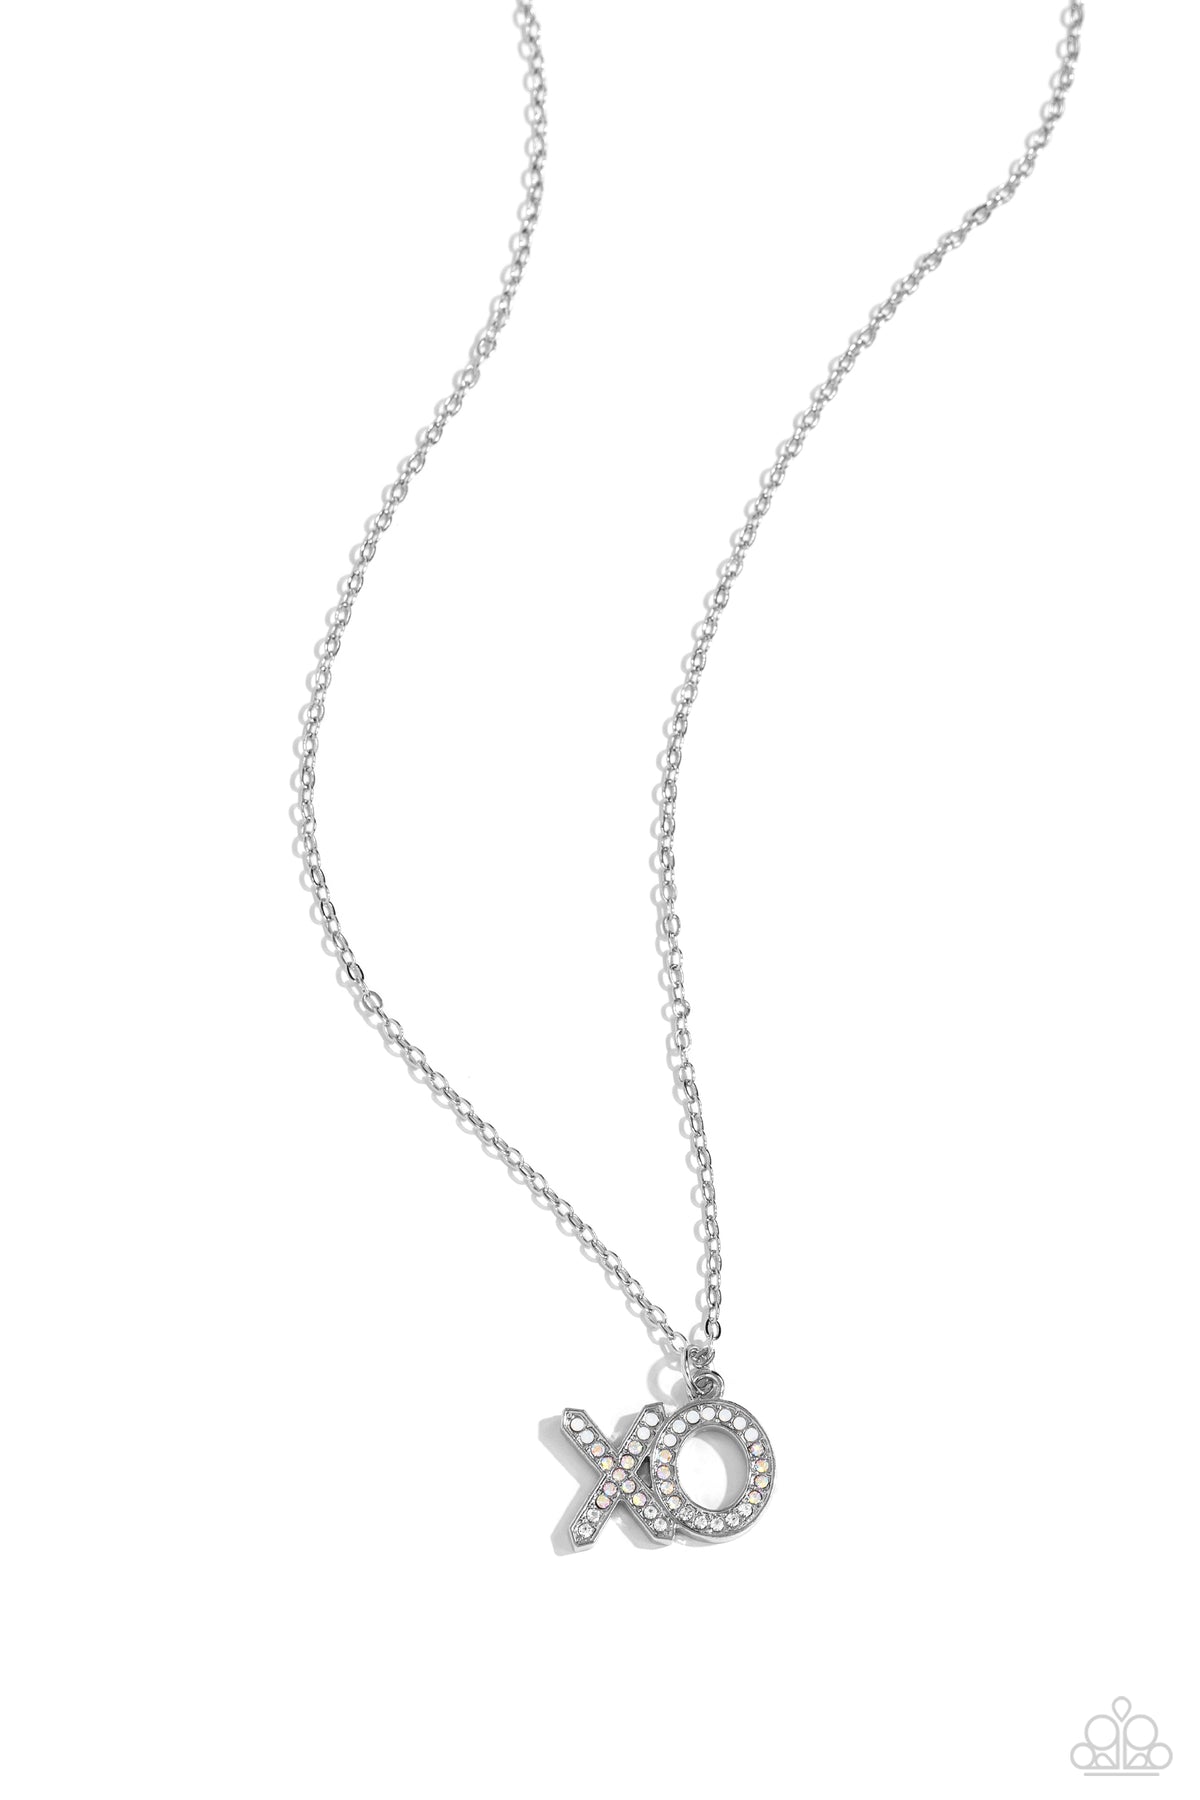 XO Necklace, Gold Collar XO Necklace, Gemma Owen Necklace, Love Island  Necklace | eBay